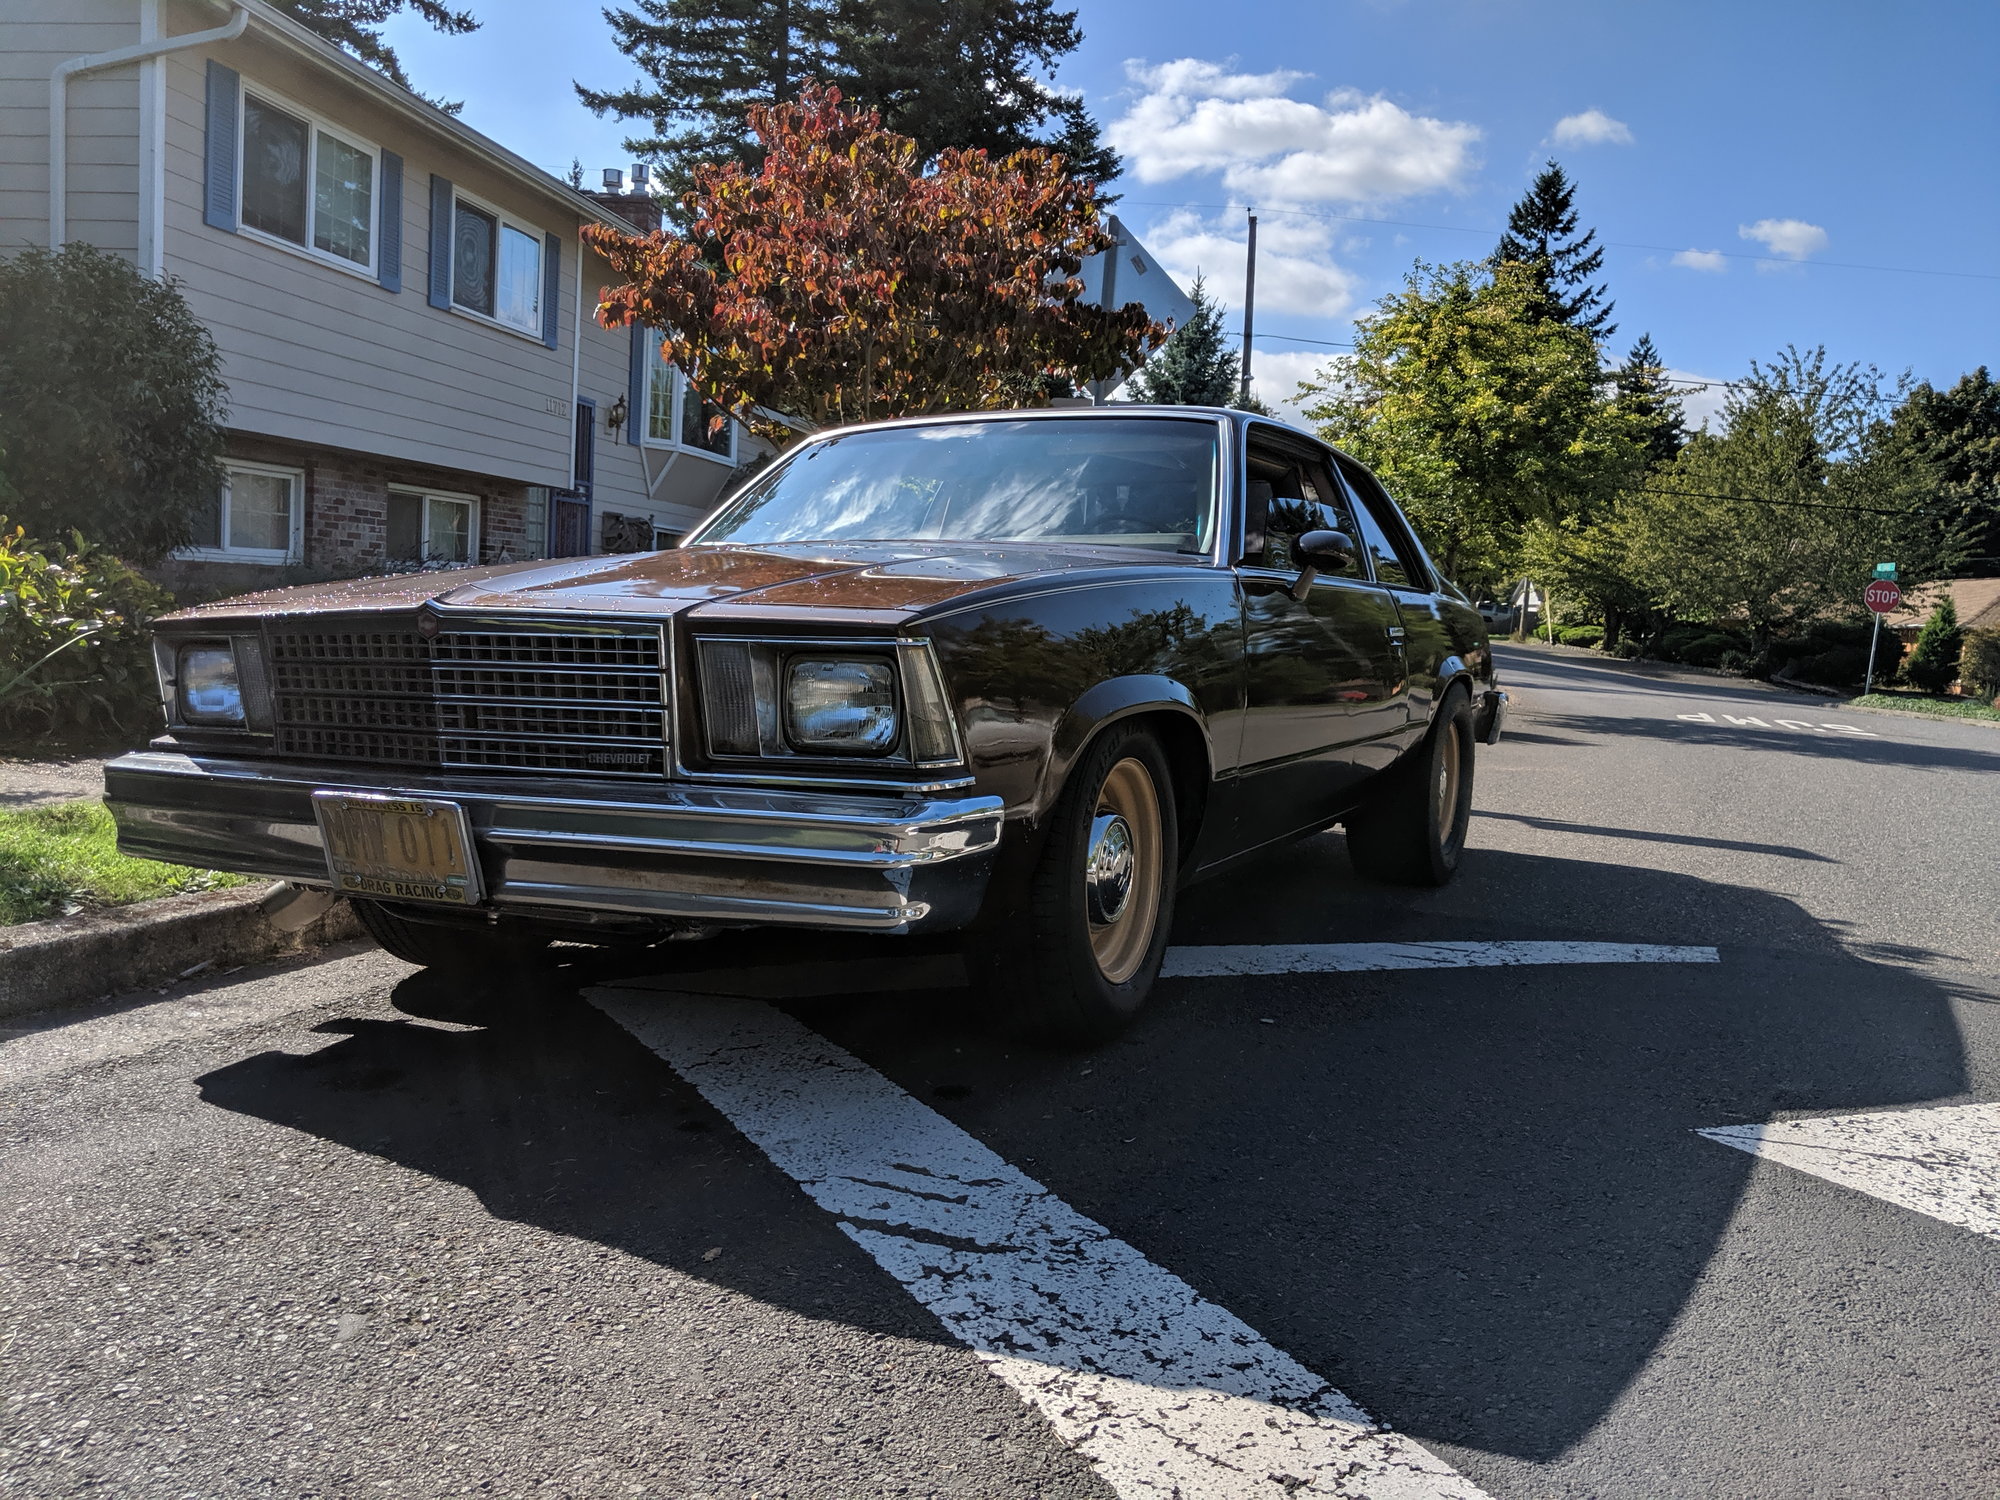 1979 Chevrolet Malibu - turbo g body malibu street/strip car - Used - VIN 1t27m9z458953 - 8 cyl - 2WD - Automatic - Coupe - Brown - Portland, OR 97220, United States